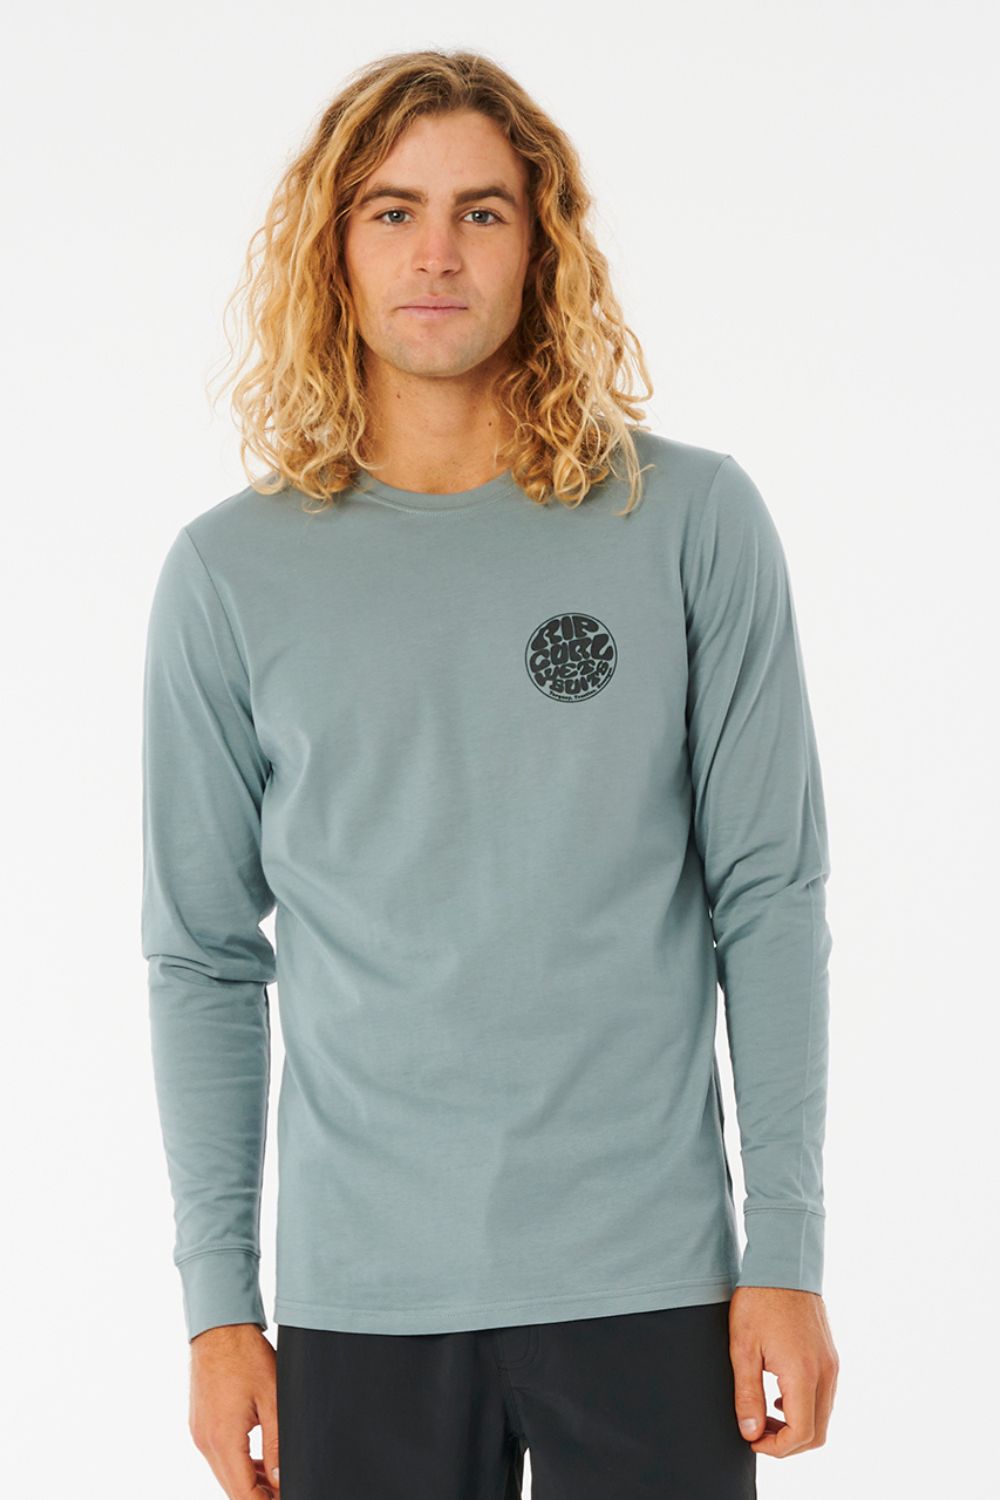 erts dik gespannen Men's long sleeve anti-UV tee shirt - ICONS OF SURF - Rip Curl – KER SUN